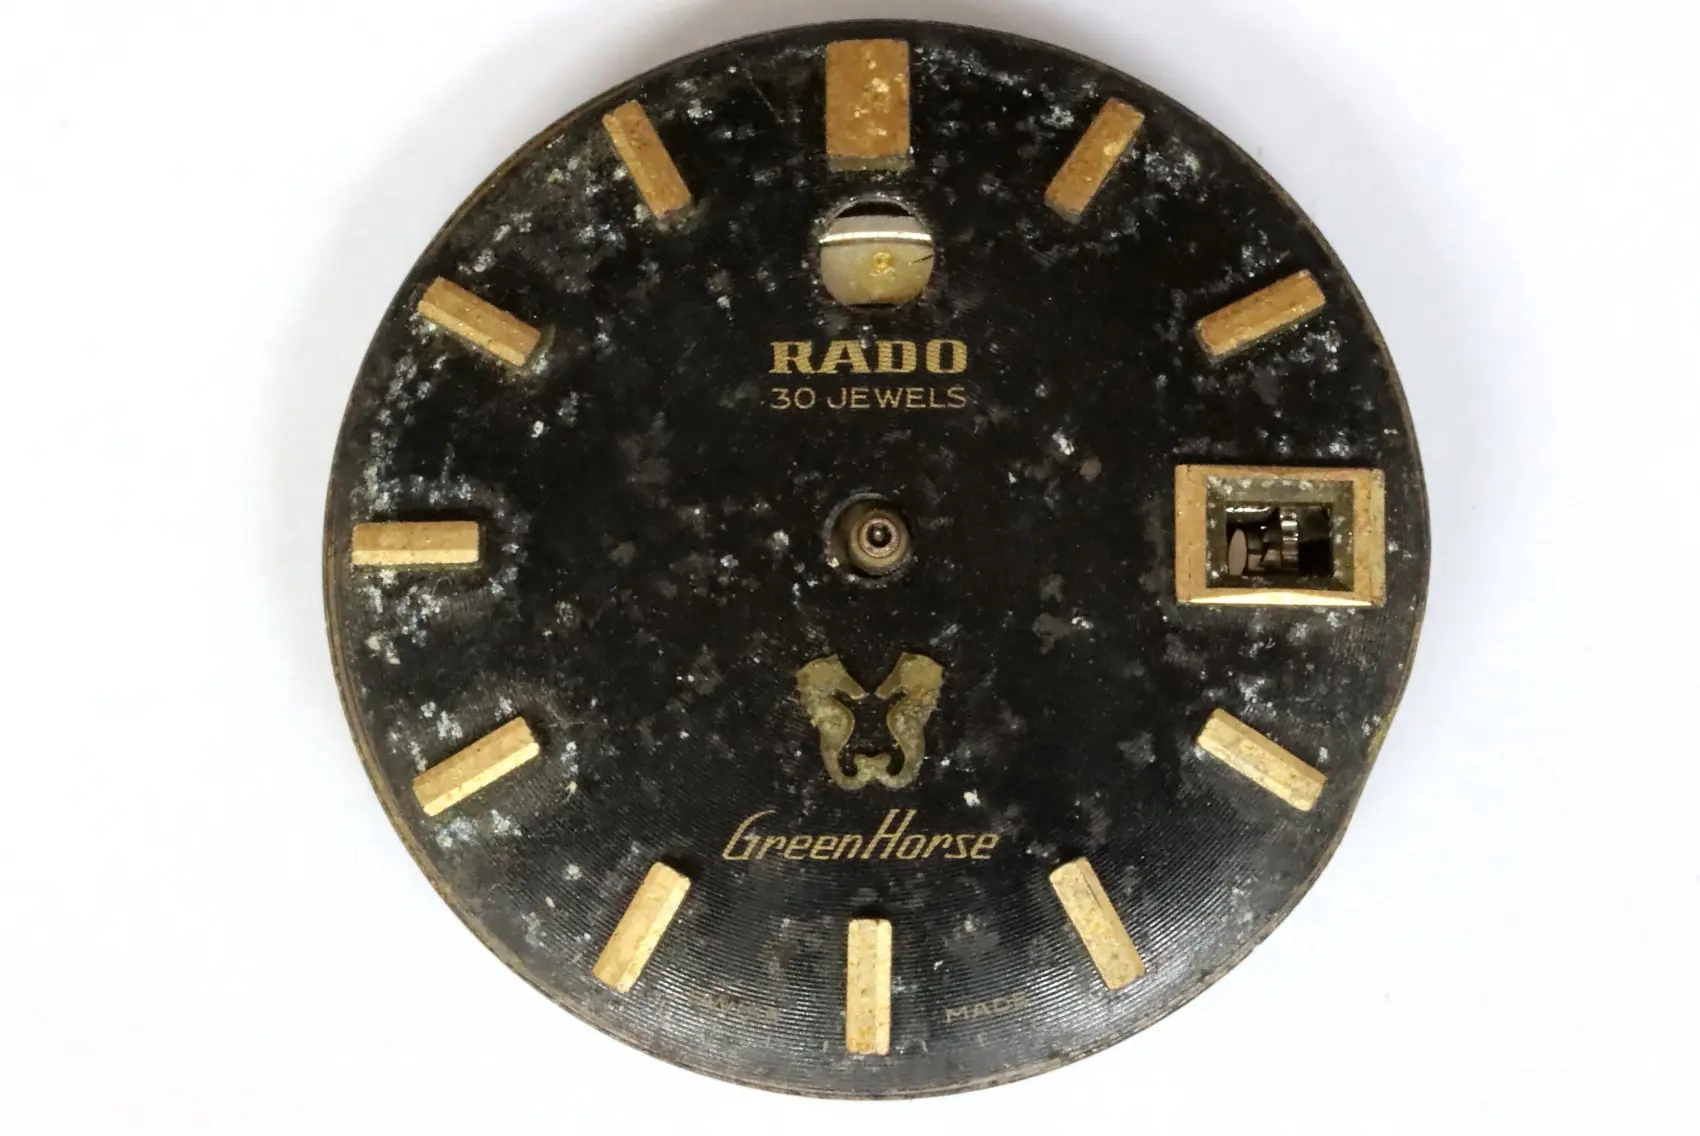 Rado defective incomplete AS 1700/01 automatic movement 